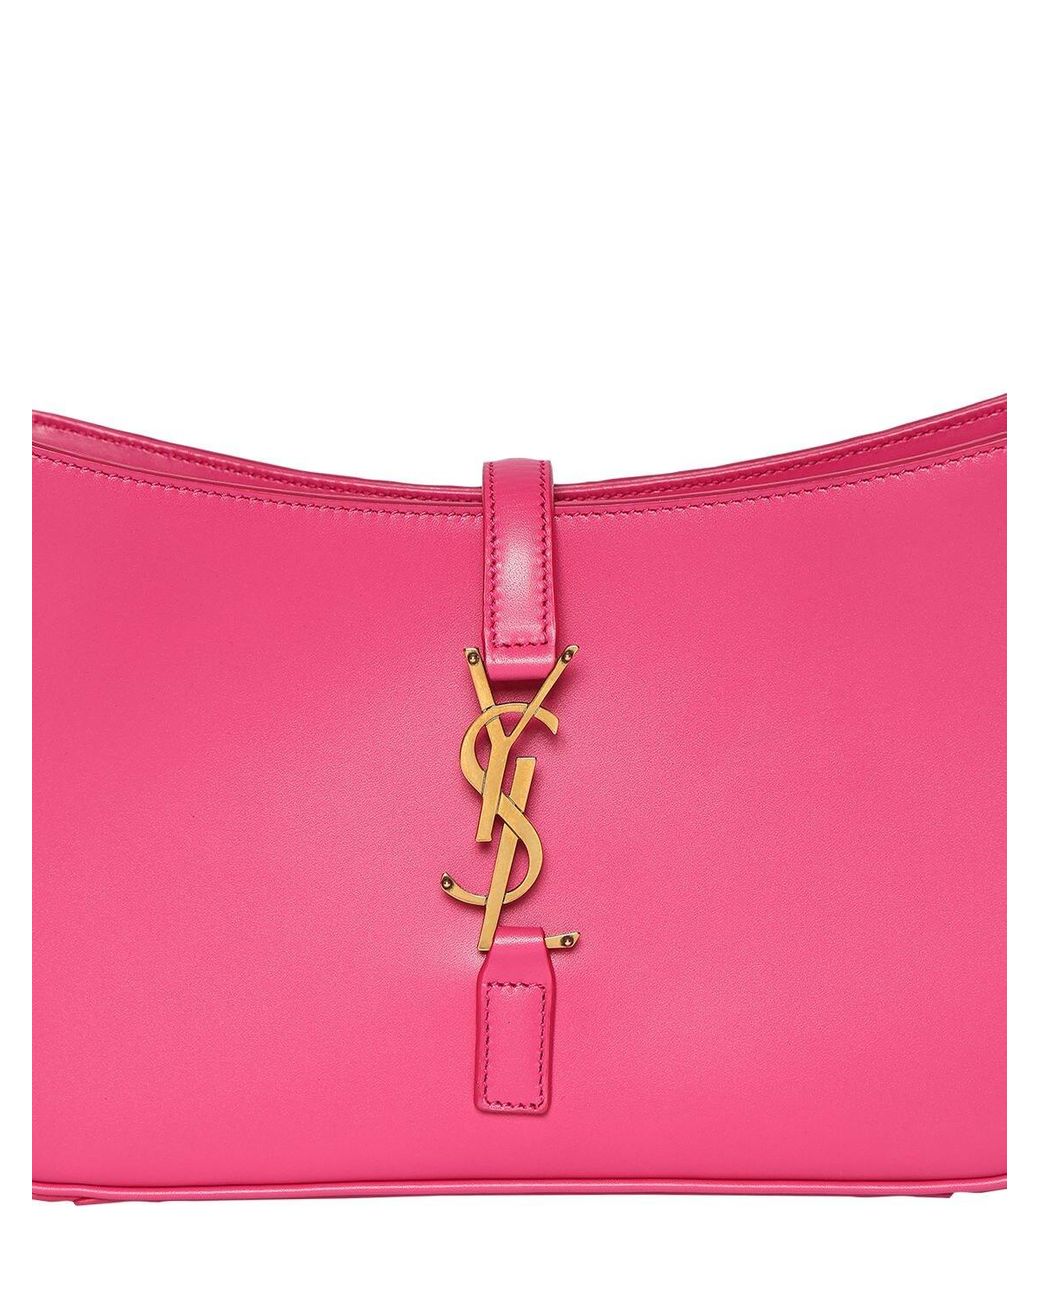 Saint Laurent Le 5 À 7 Leather Hobo Bag in Pink